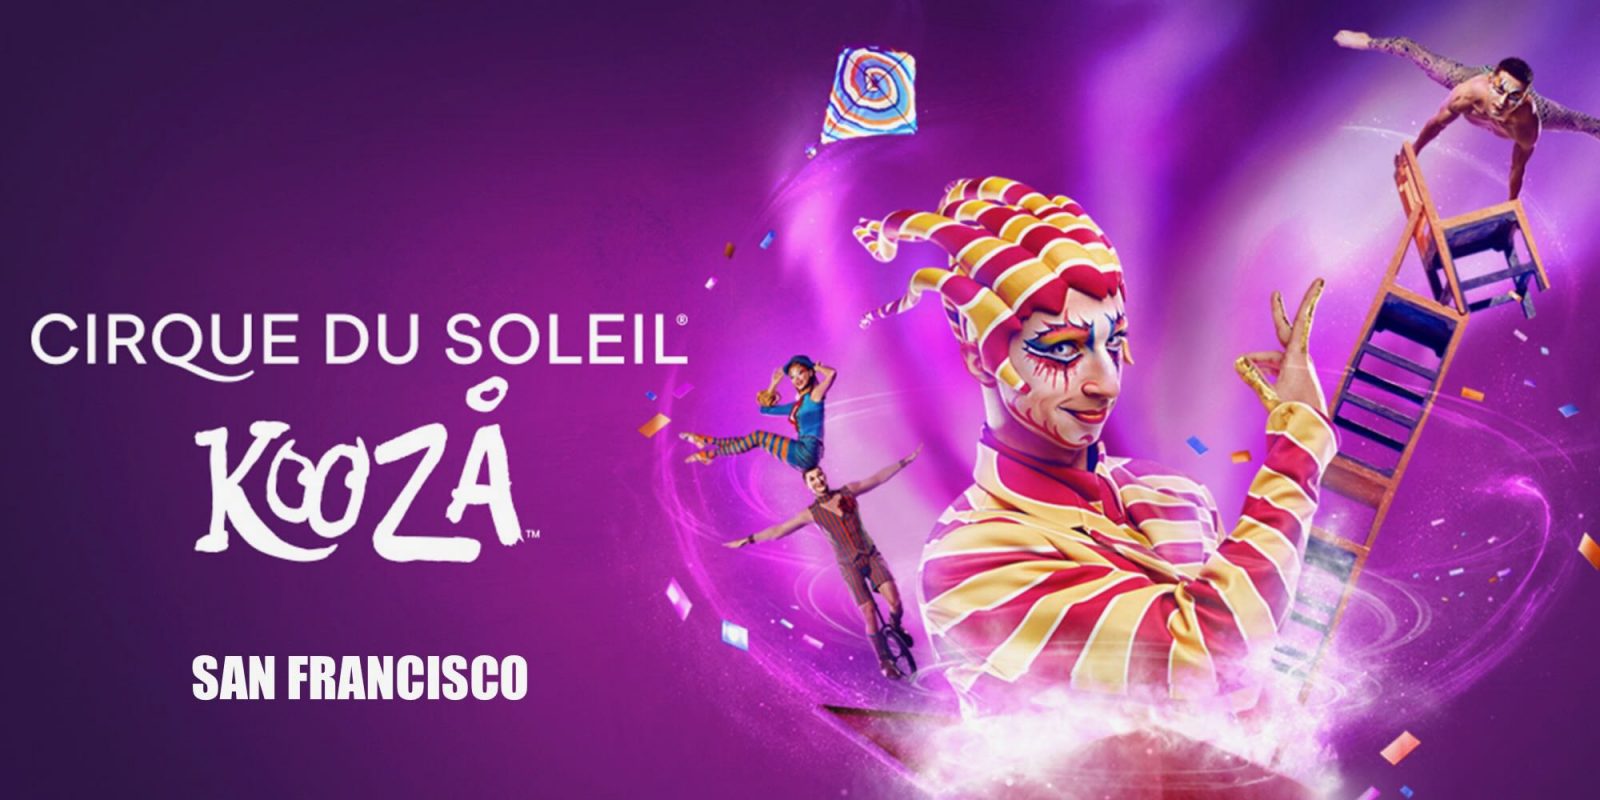 Cirque du Soleil: KOOZA